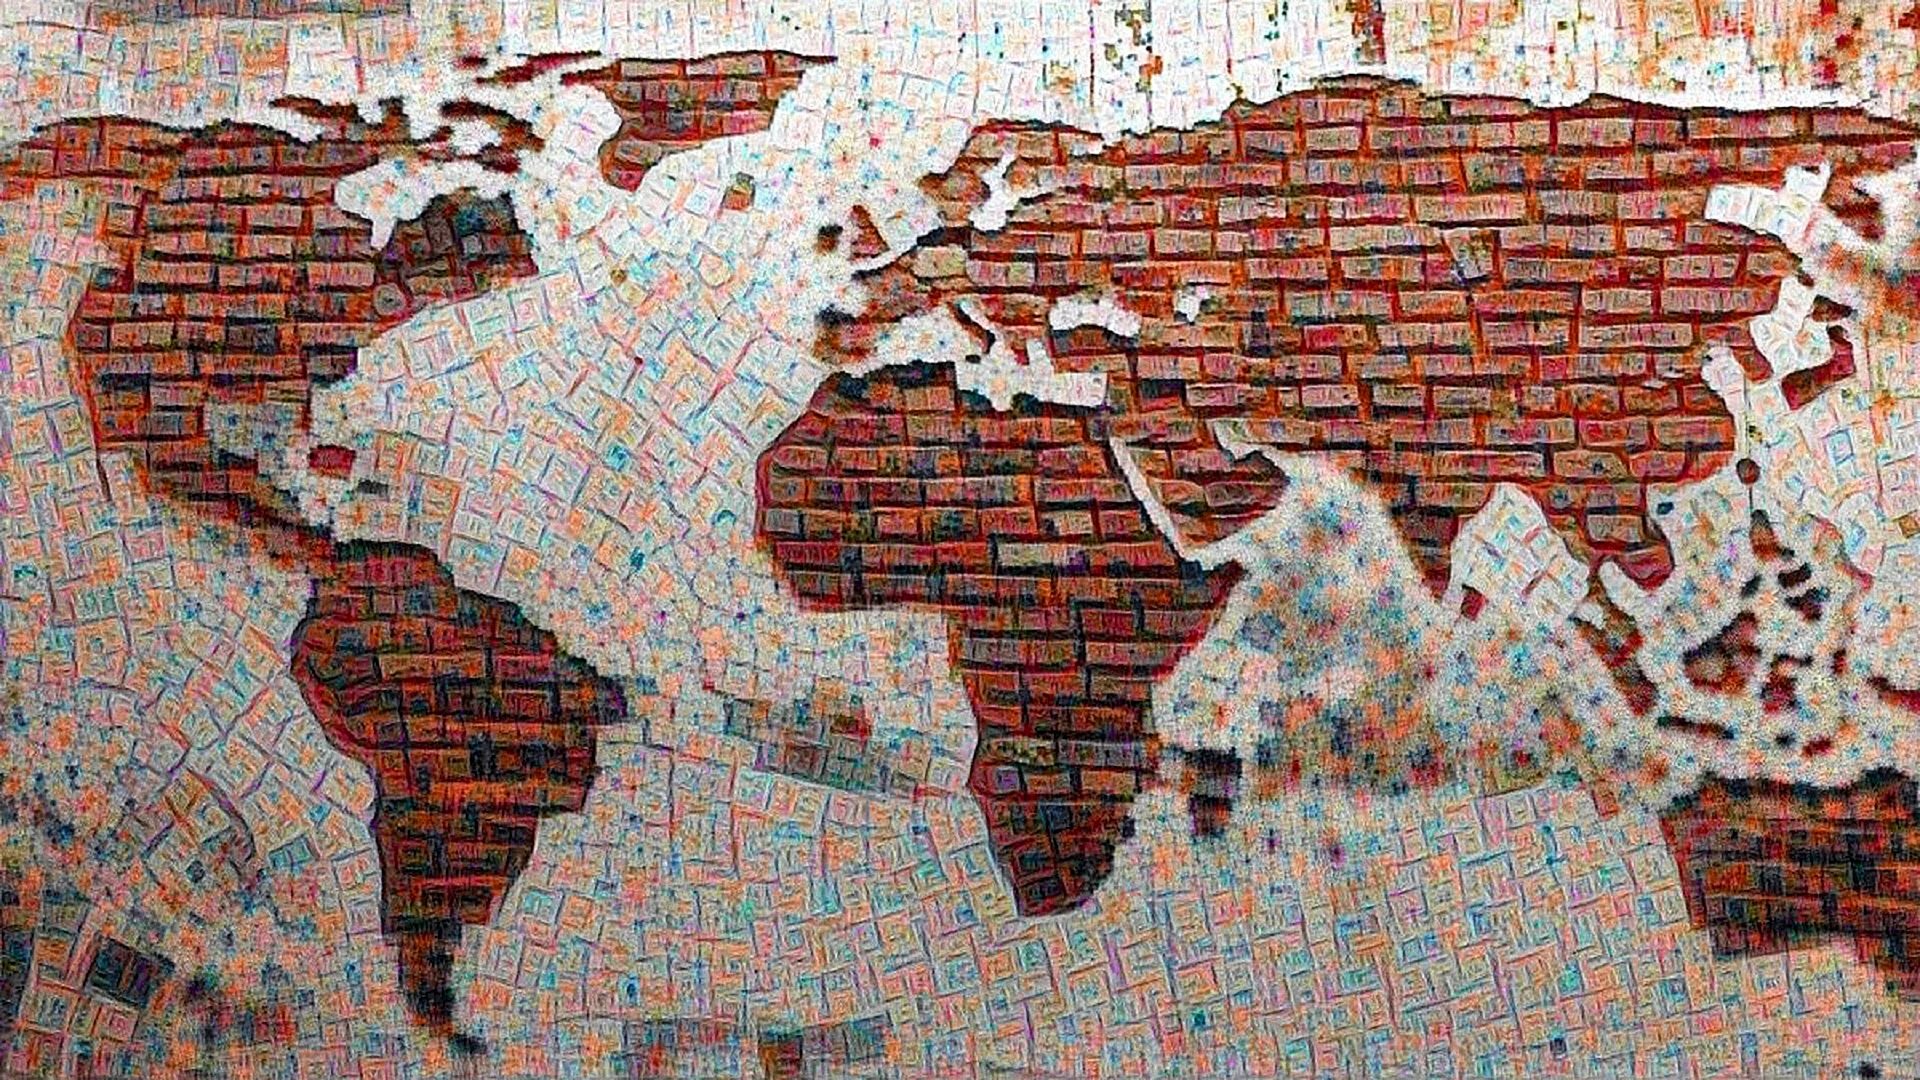 Карта мира на кирпичной стене